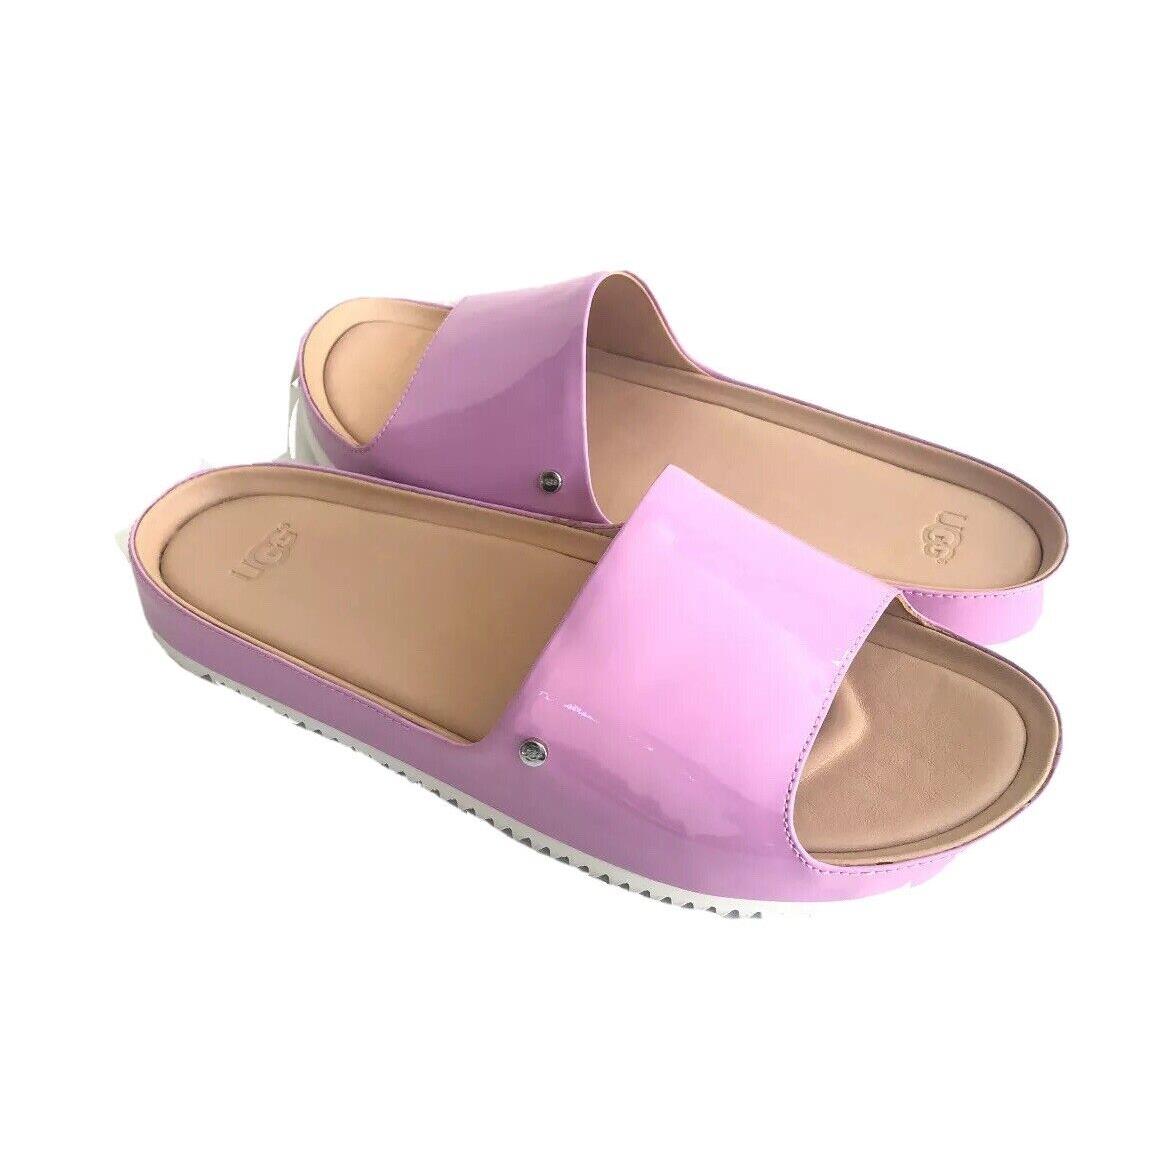 Ugg Jane Patent Prickly Rose Slide Leather Slippers US 7.5 / EU 38.5 / UK 5.5